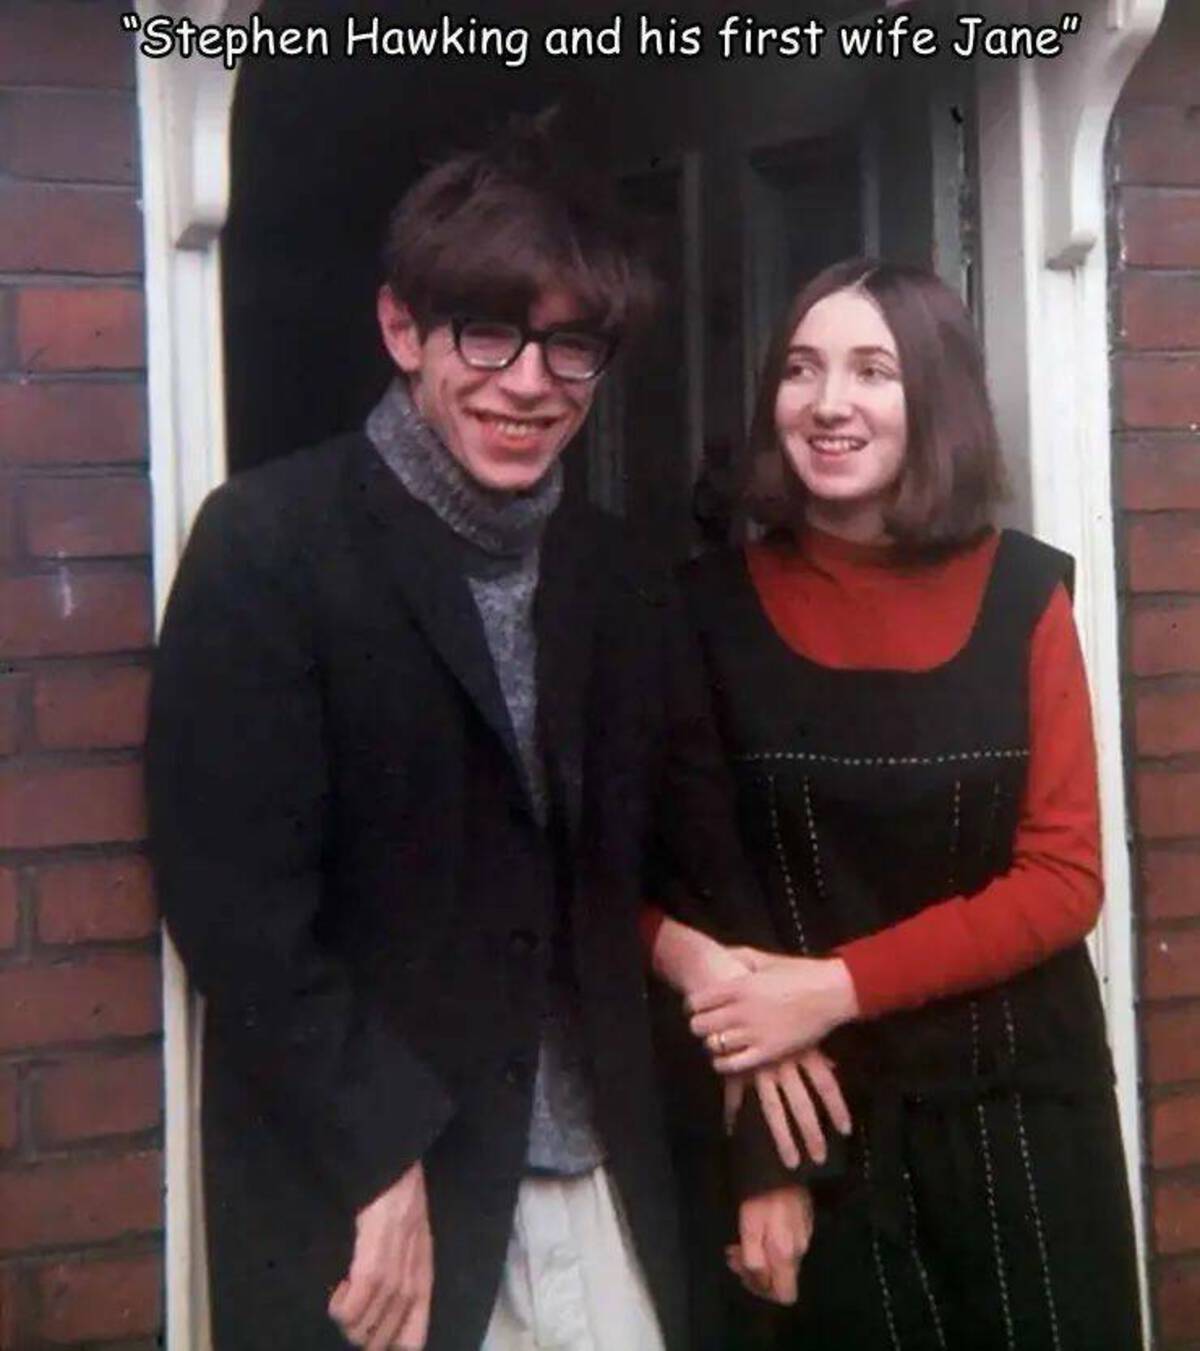 jane wilde stephen hawking - "Stephen Hawking and his first wife Jane"